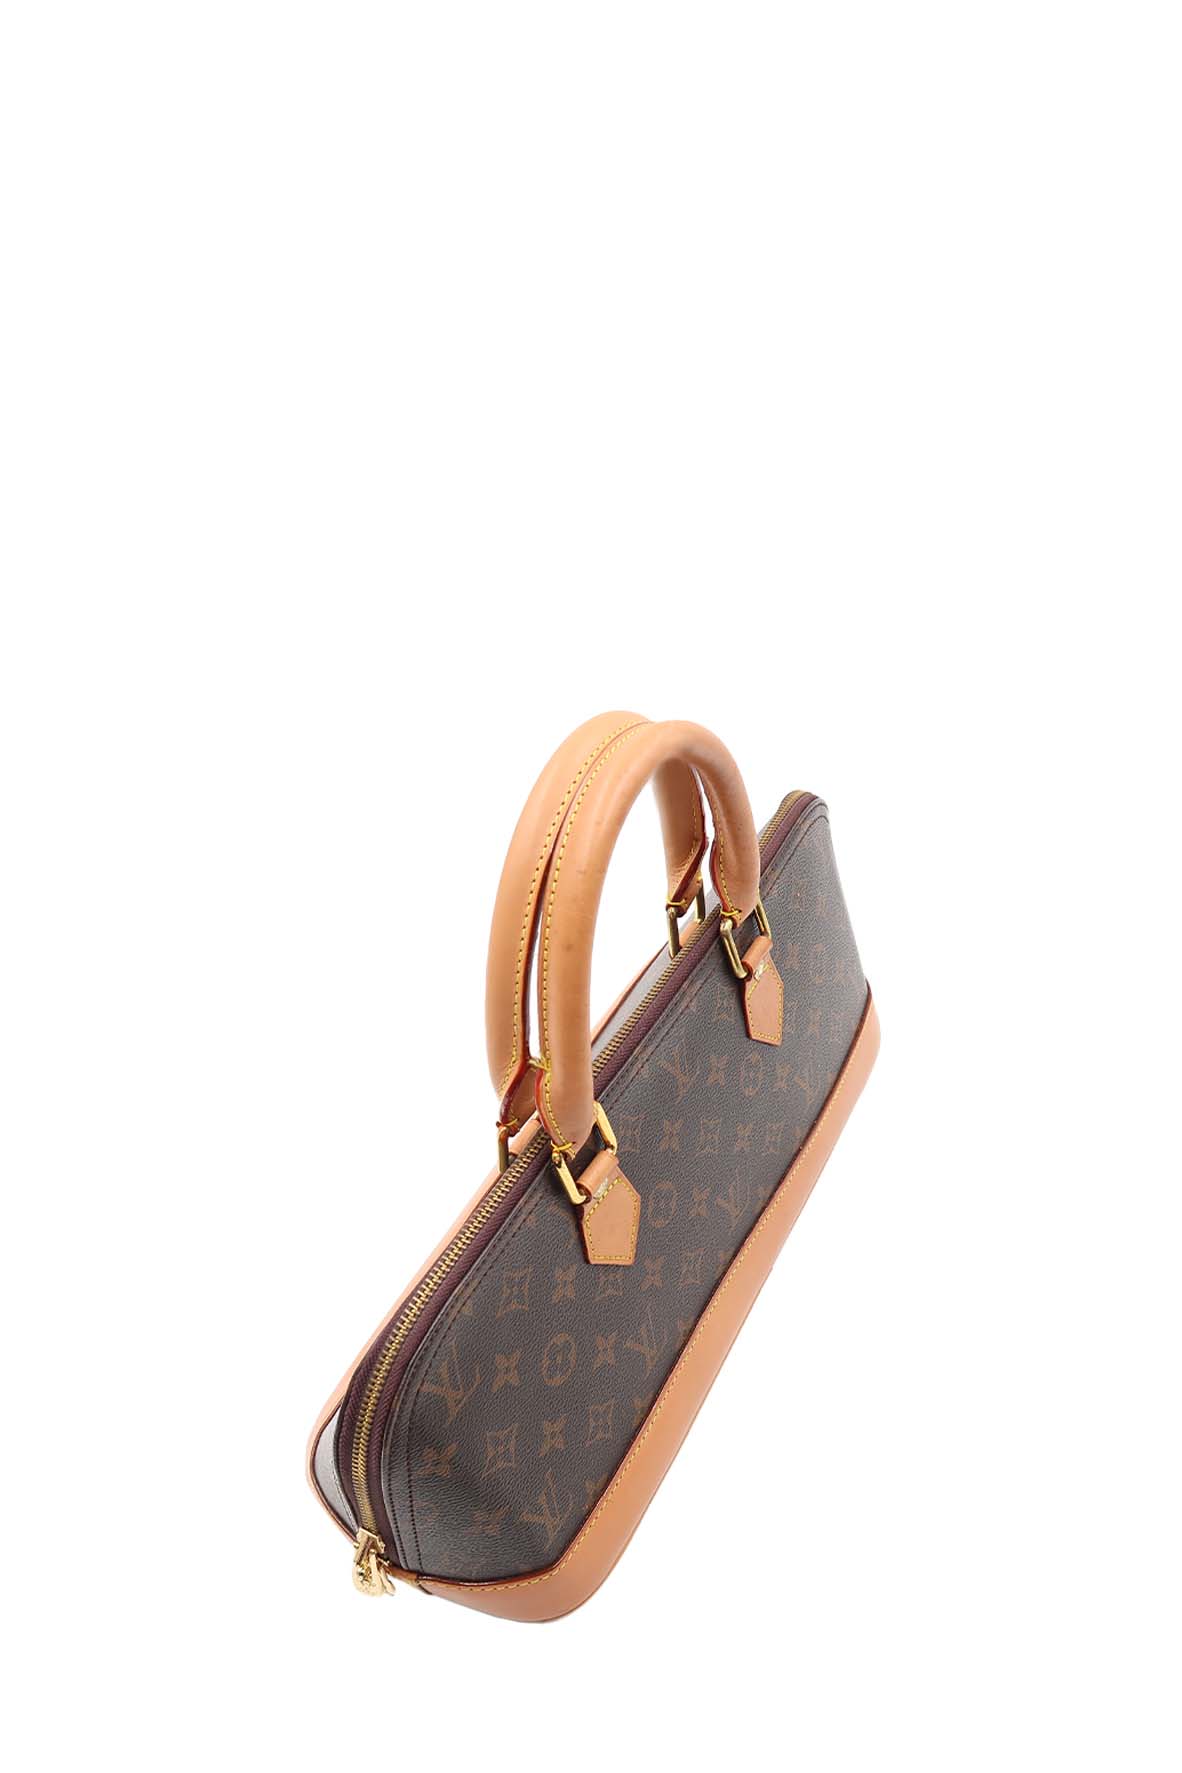 Louis Vuitton M92207 Cherry Monogram Mini Alma Long Tote Bag - The Attic  Place